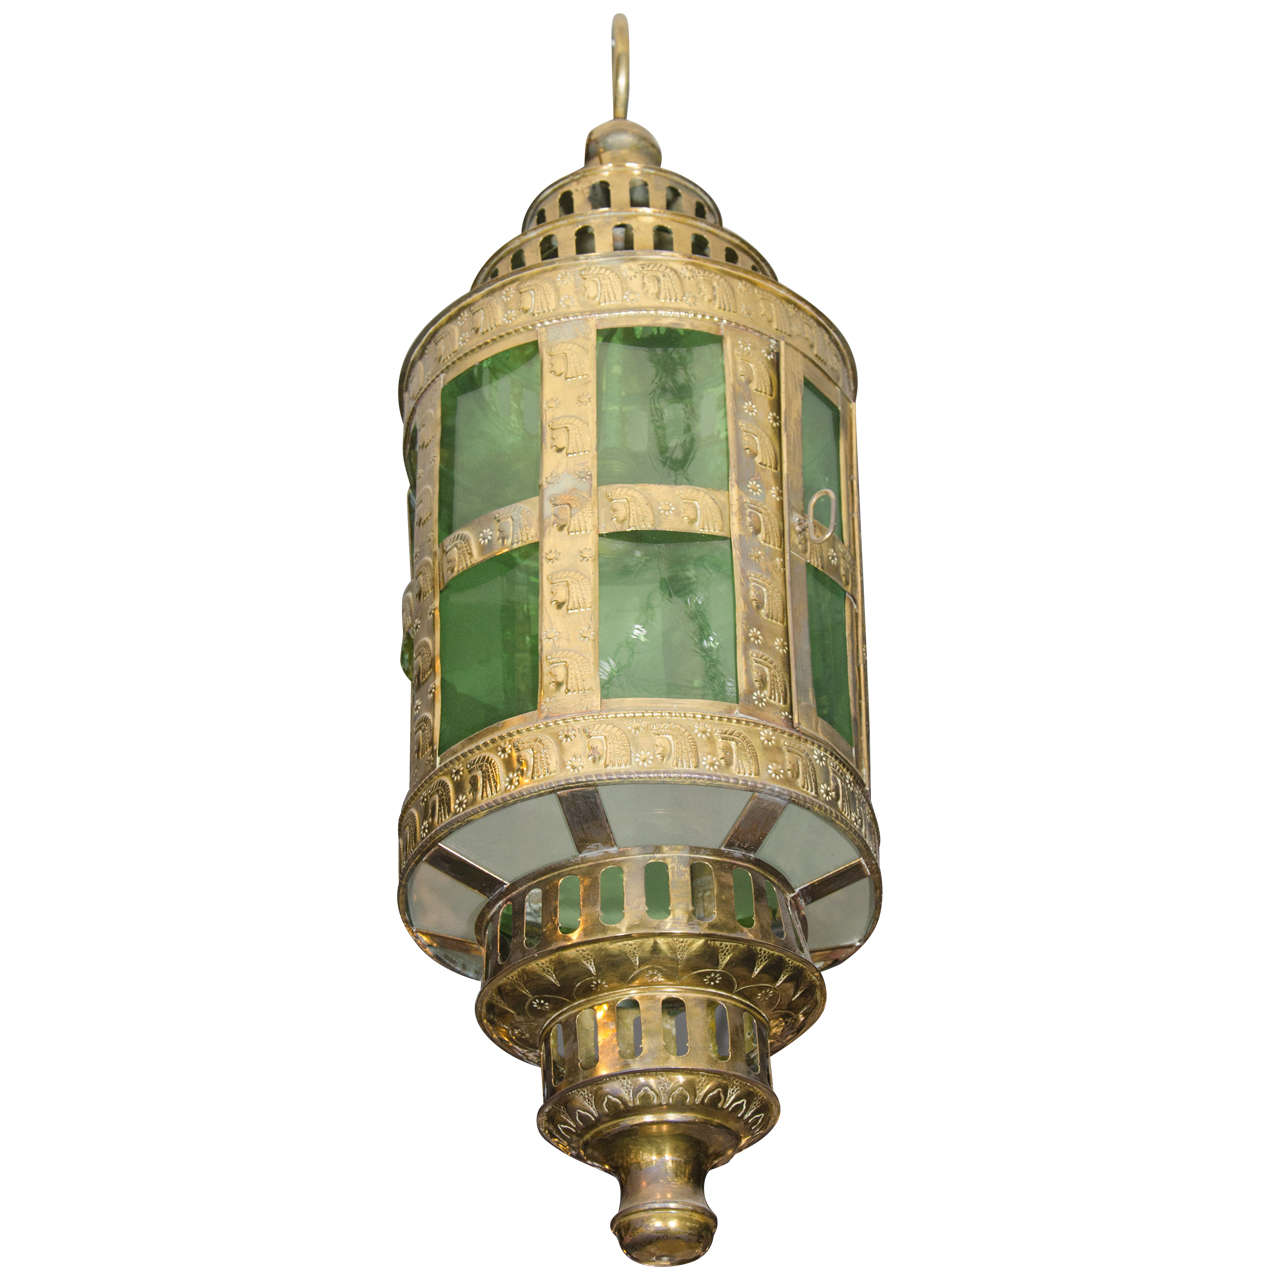 Antique Ship's Lantern